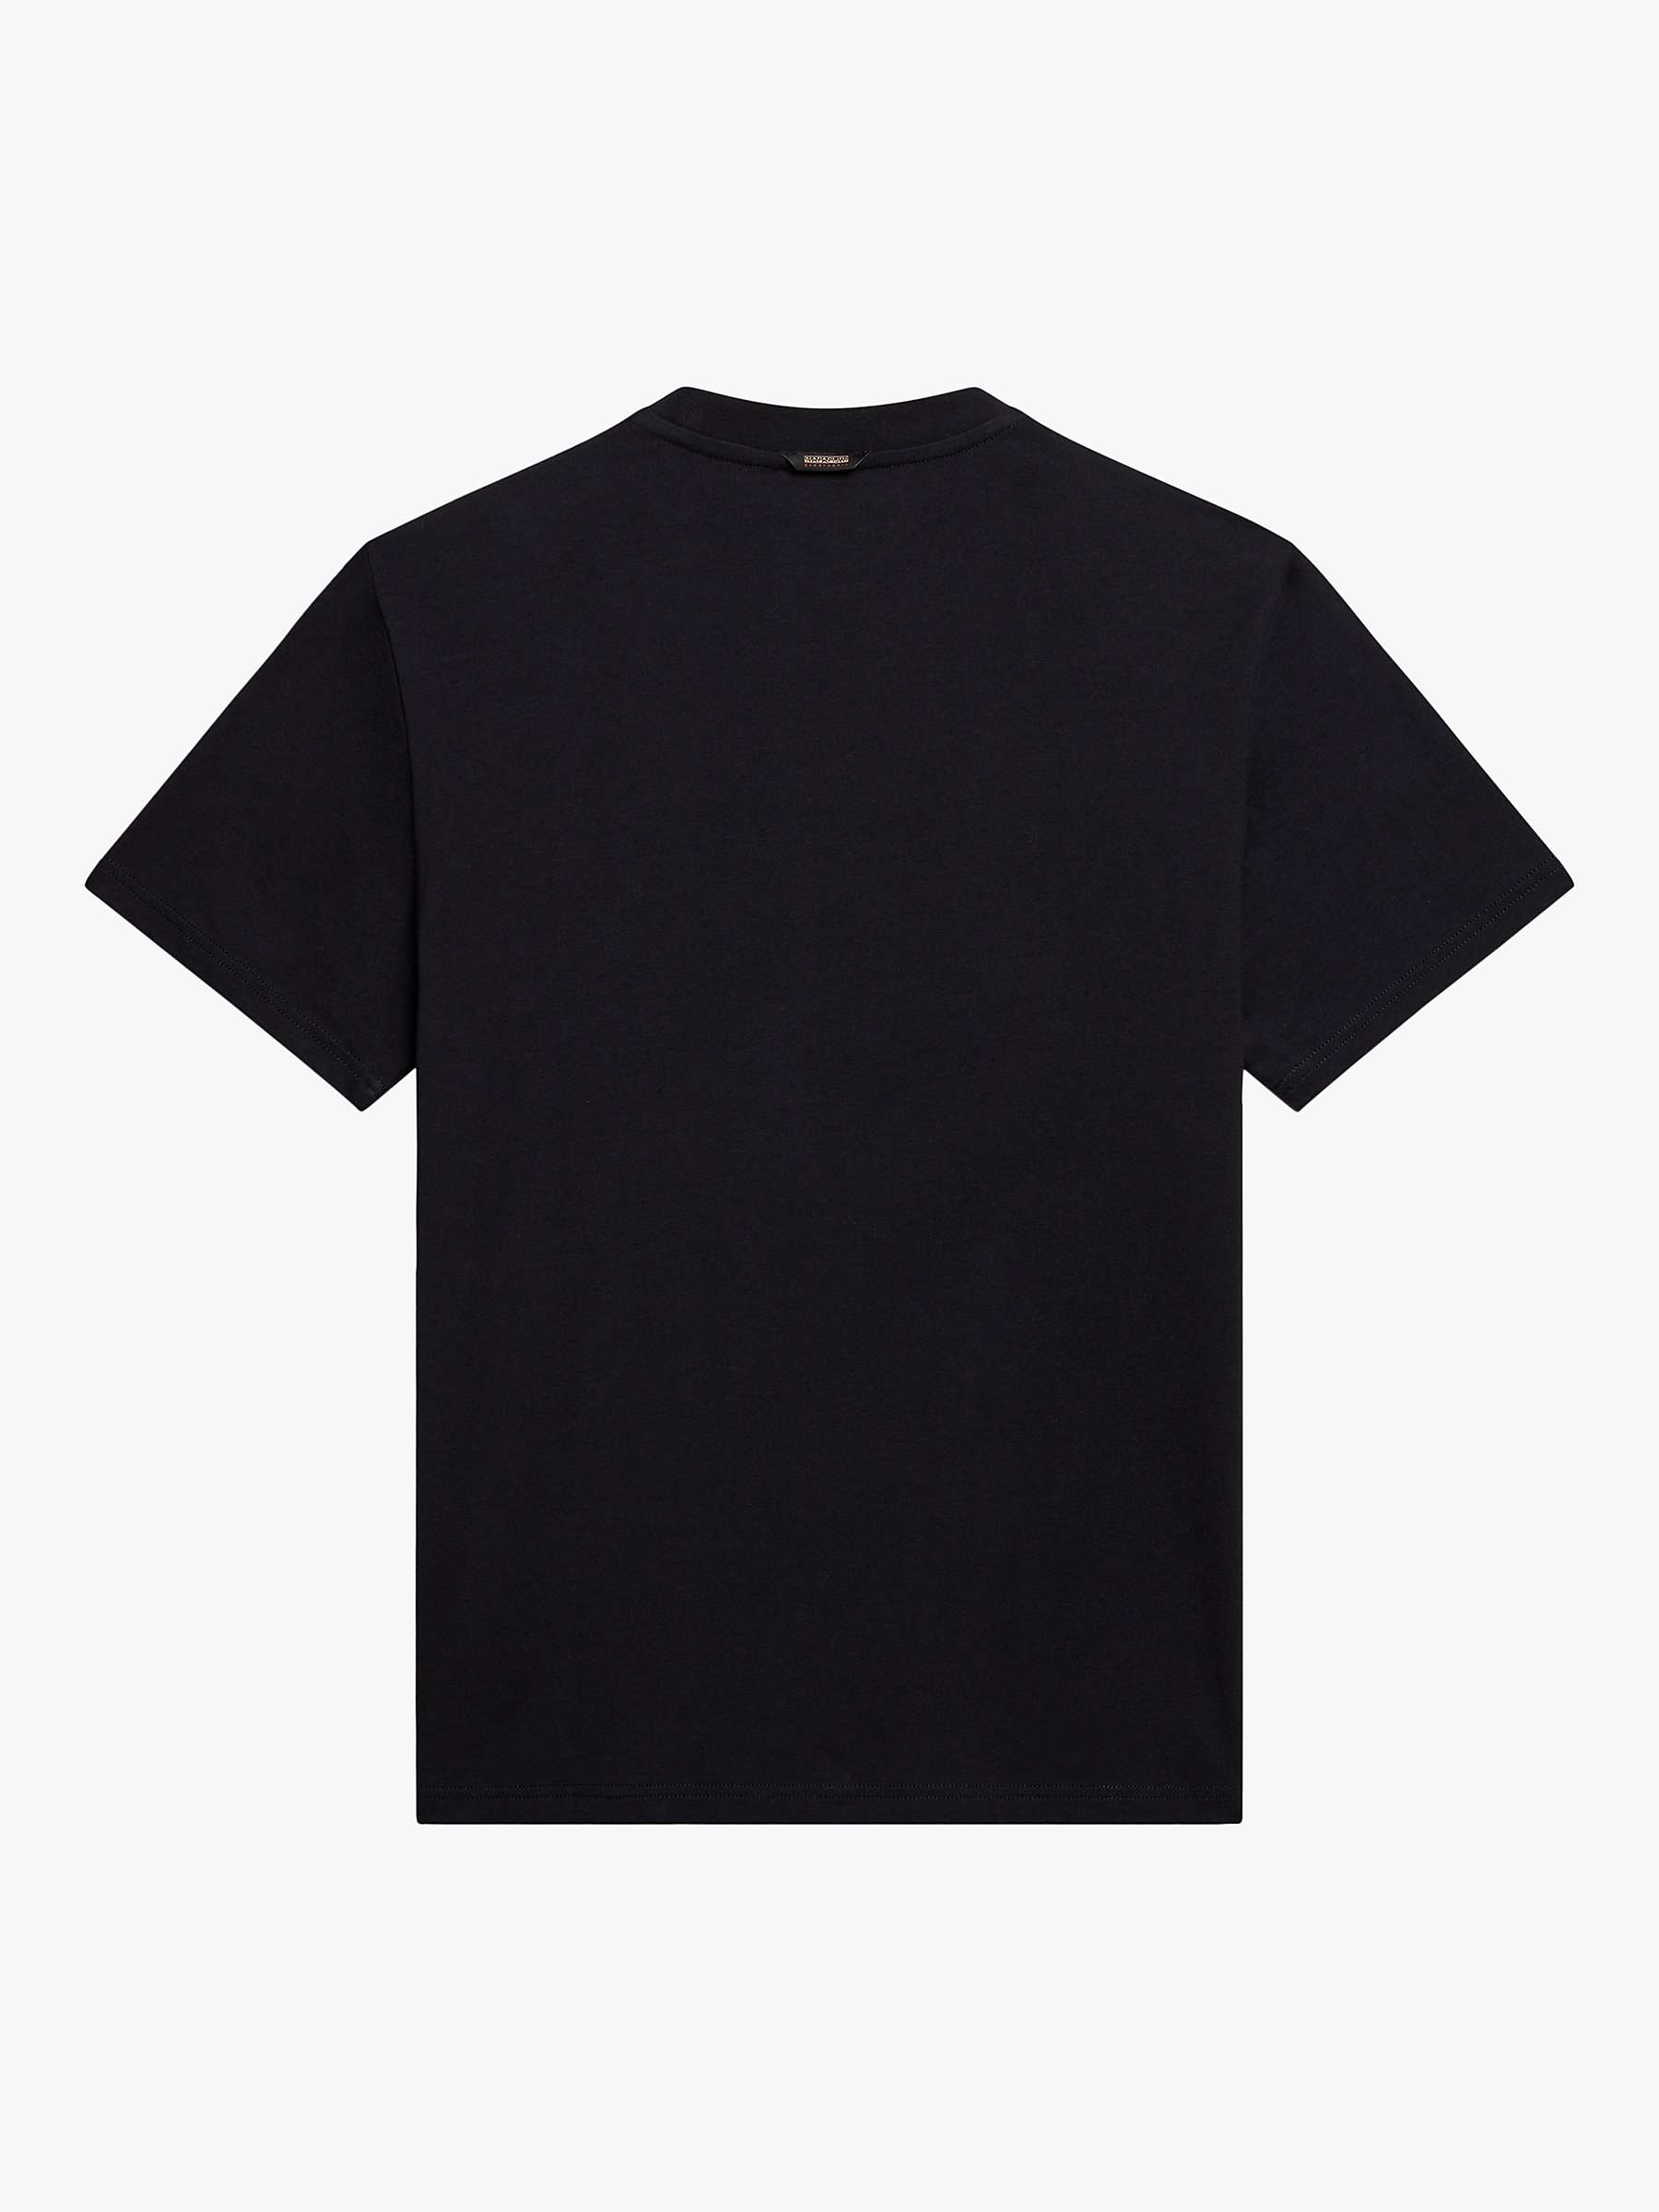 Buy Napapijri Canada Graphic T-Shirt, Black/Multi Online at johnlewis.com